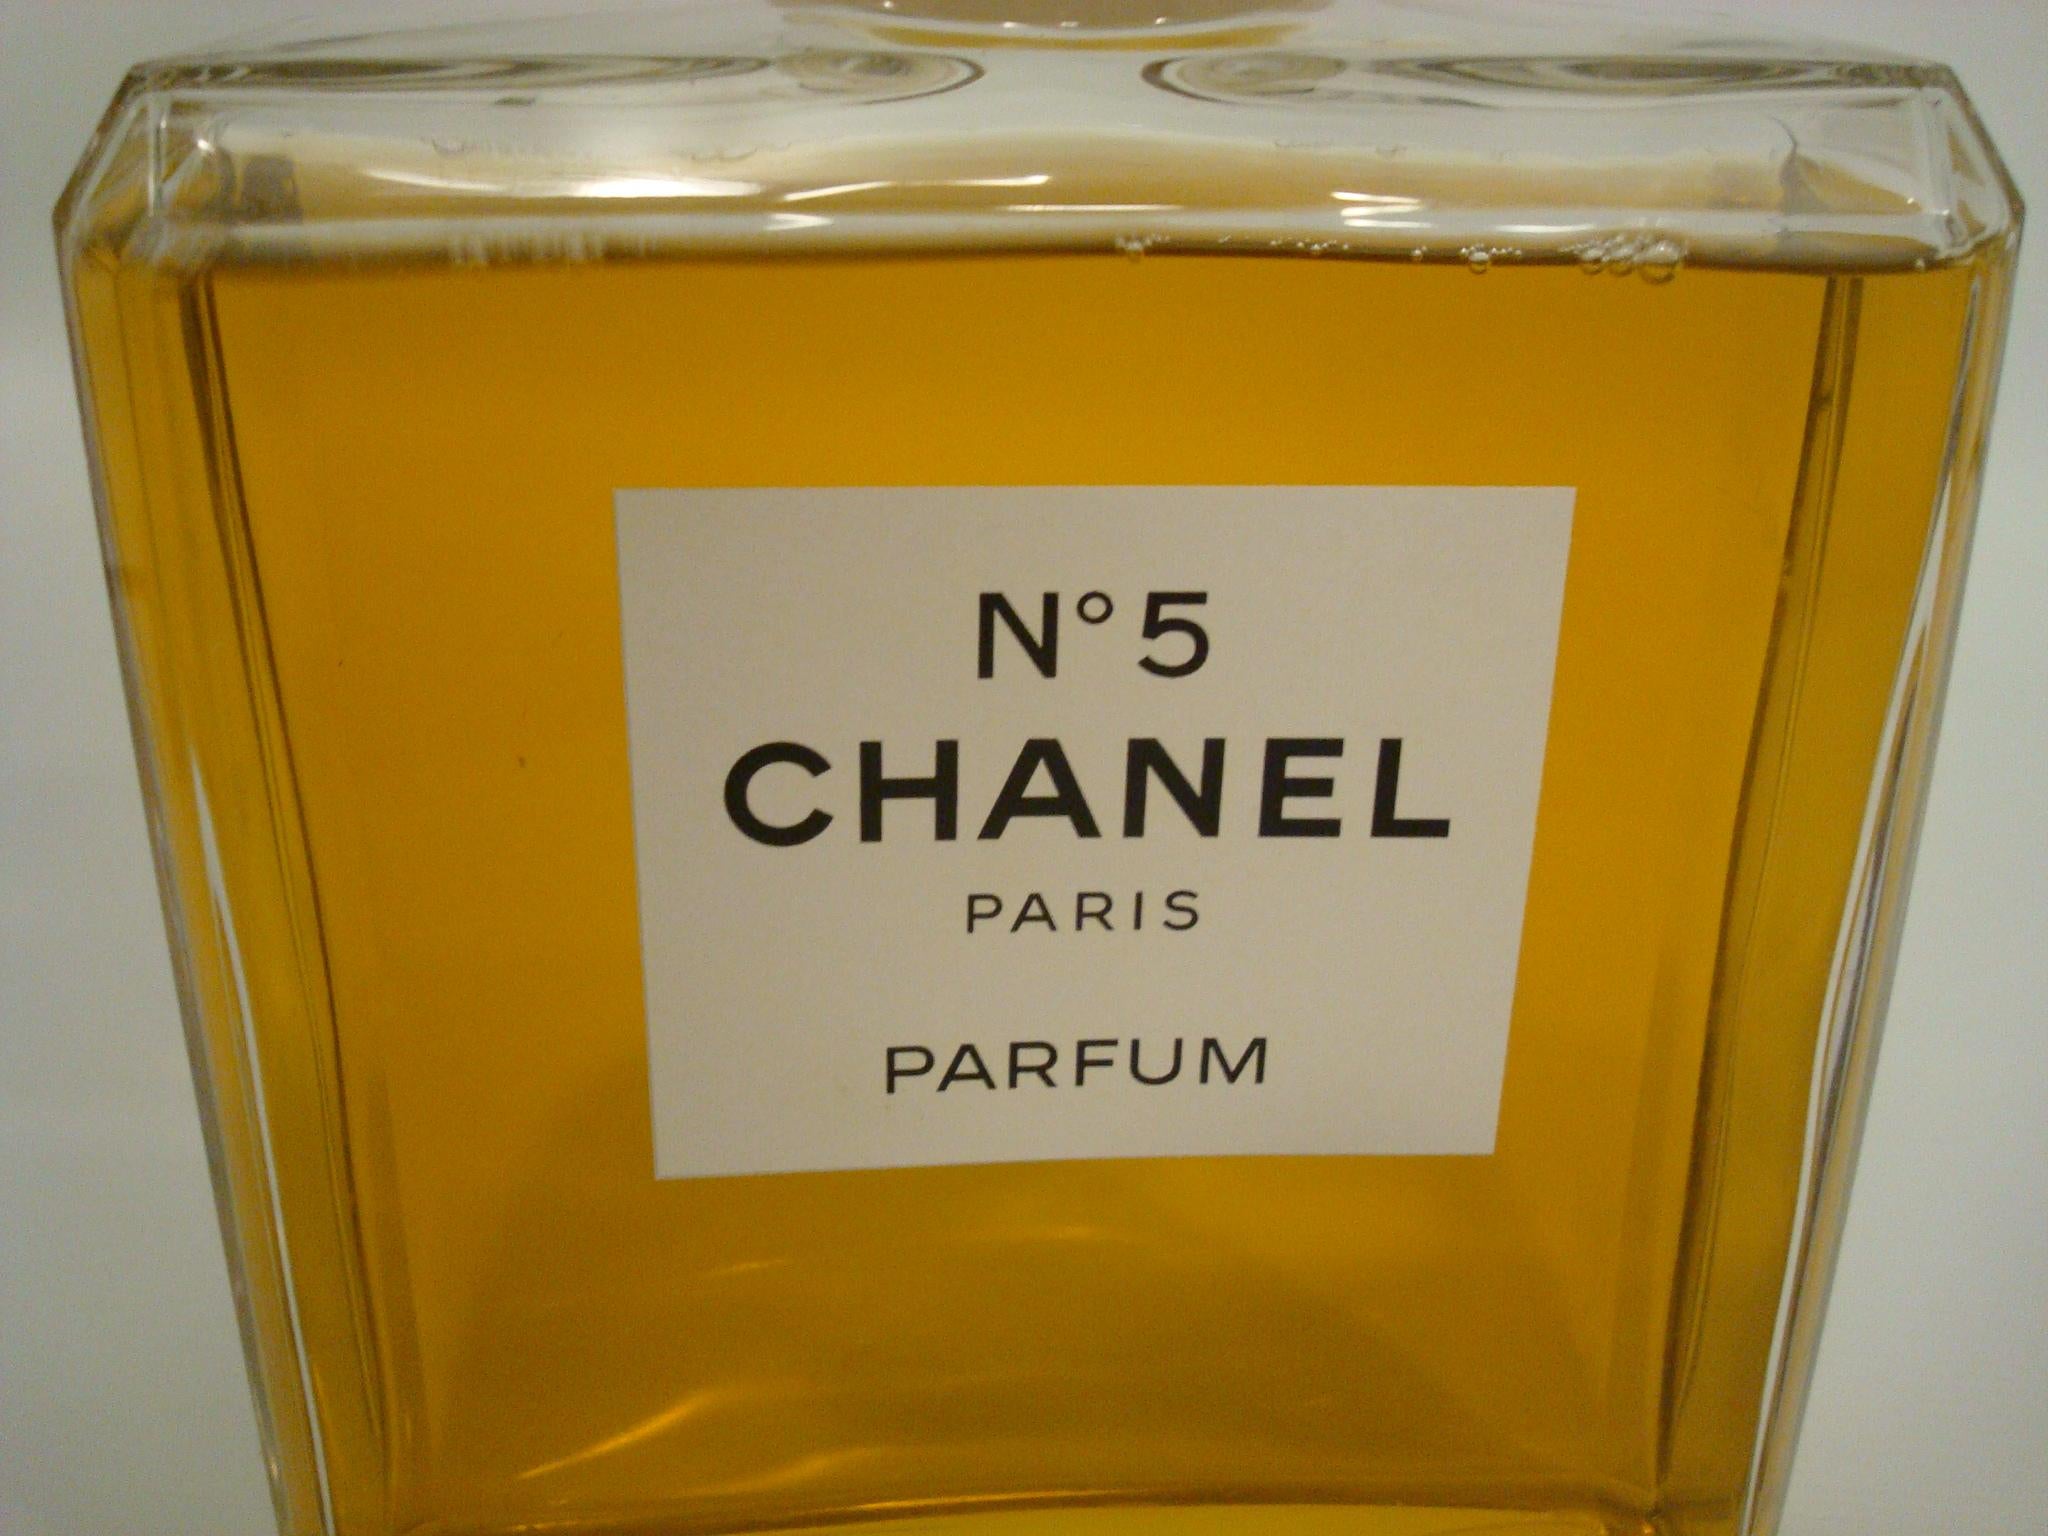 Chanel N5 Huge Store Display Perfume Bottle Advertising, France, 20th Century 3